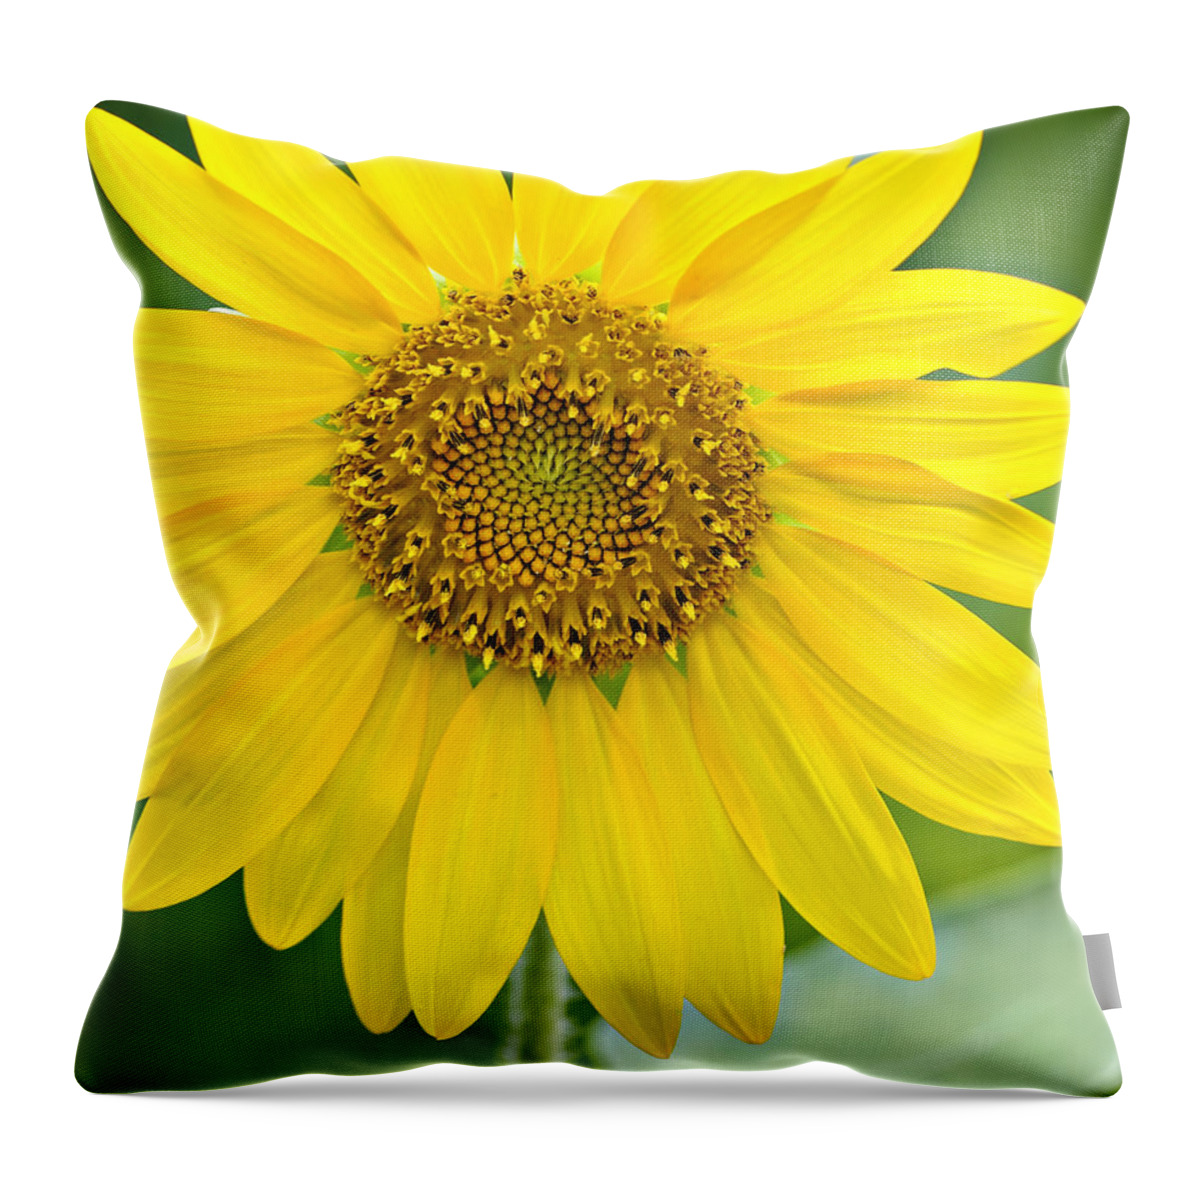 Sunflower Throw Pillow featuring the photograph Sunflower Power by Carol Eade